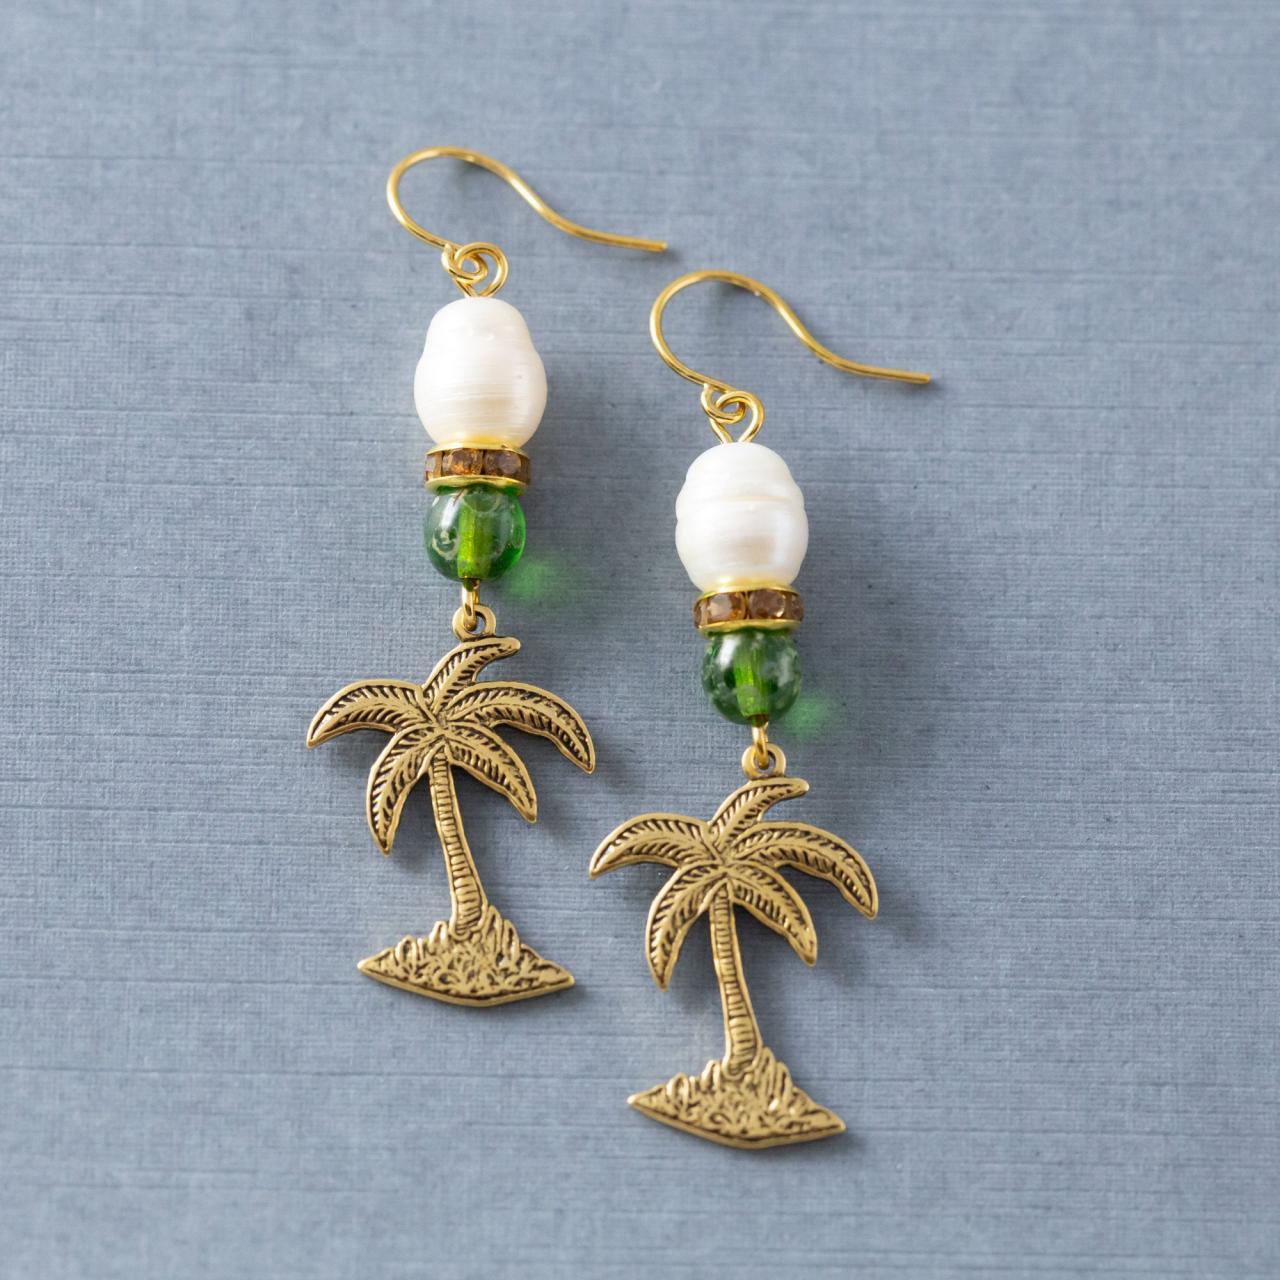 Gold Tone Palm Tree Earrings, Tropical Earrings, Freshwater Pearl Earrings, Palm Tree Dangle Earrings, Palm Tree Jewelry, Summer Earrings